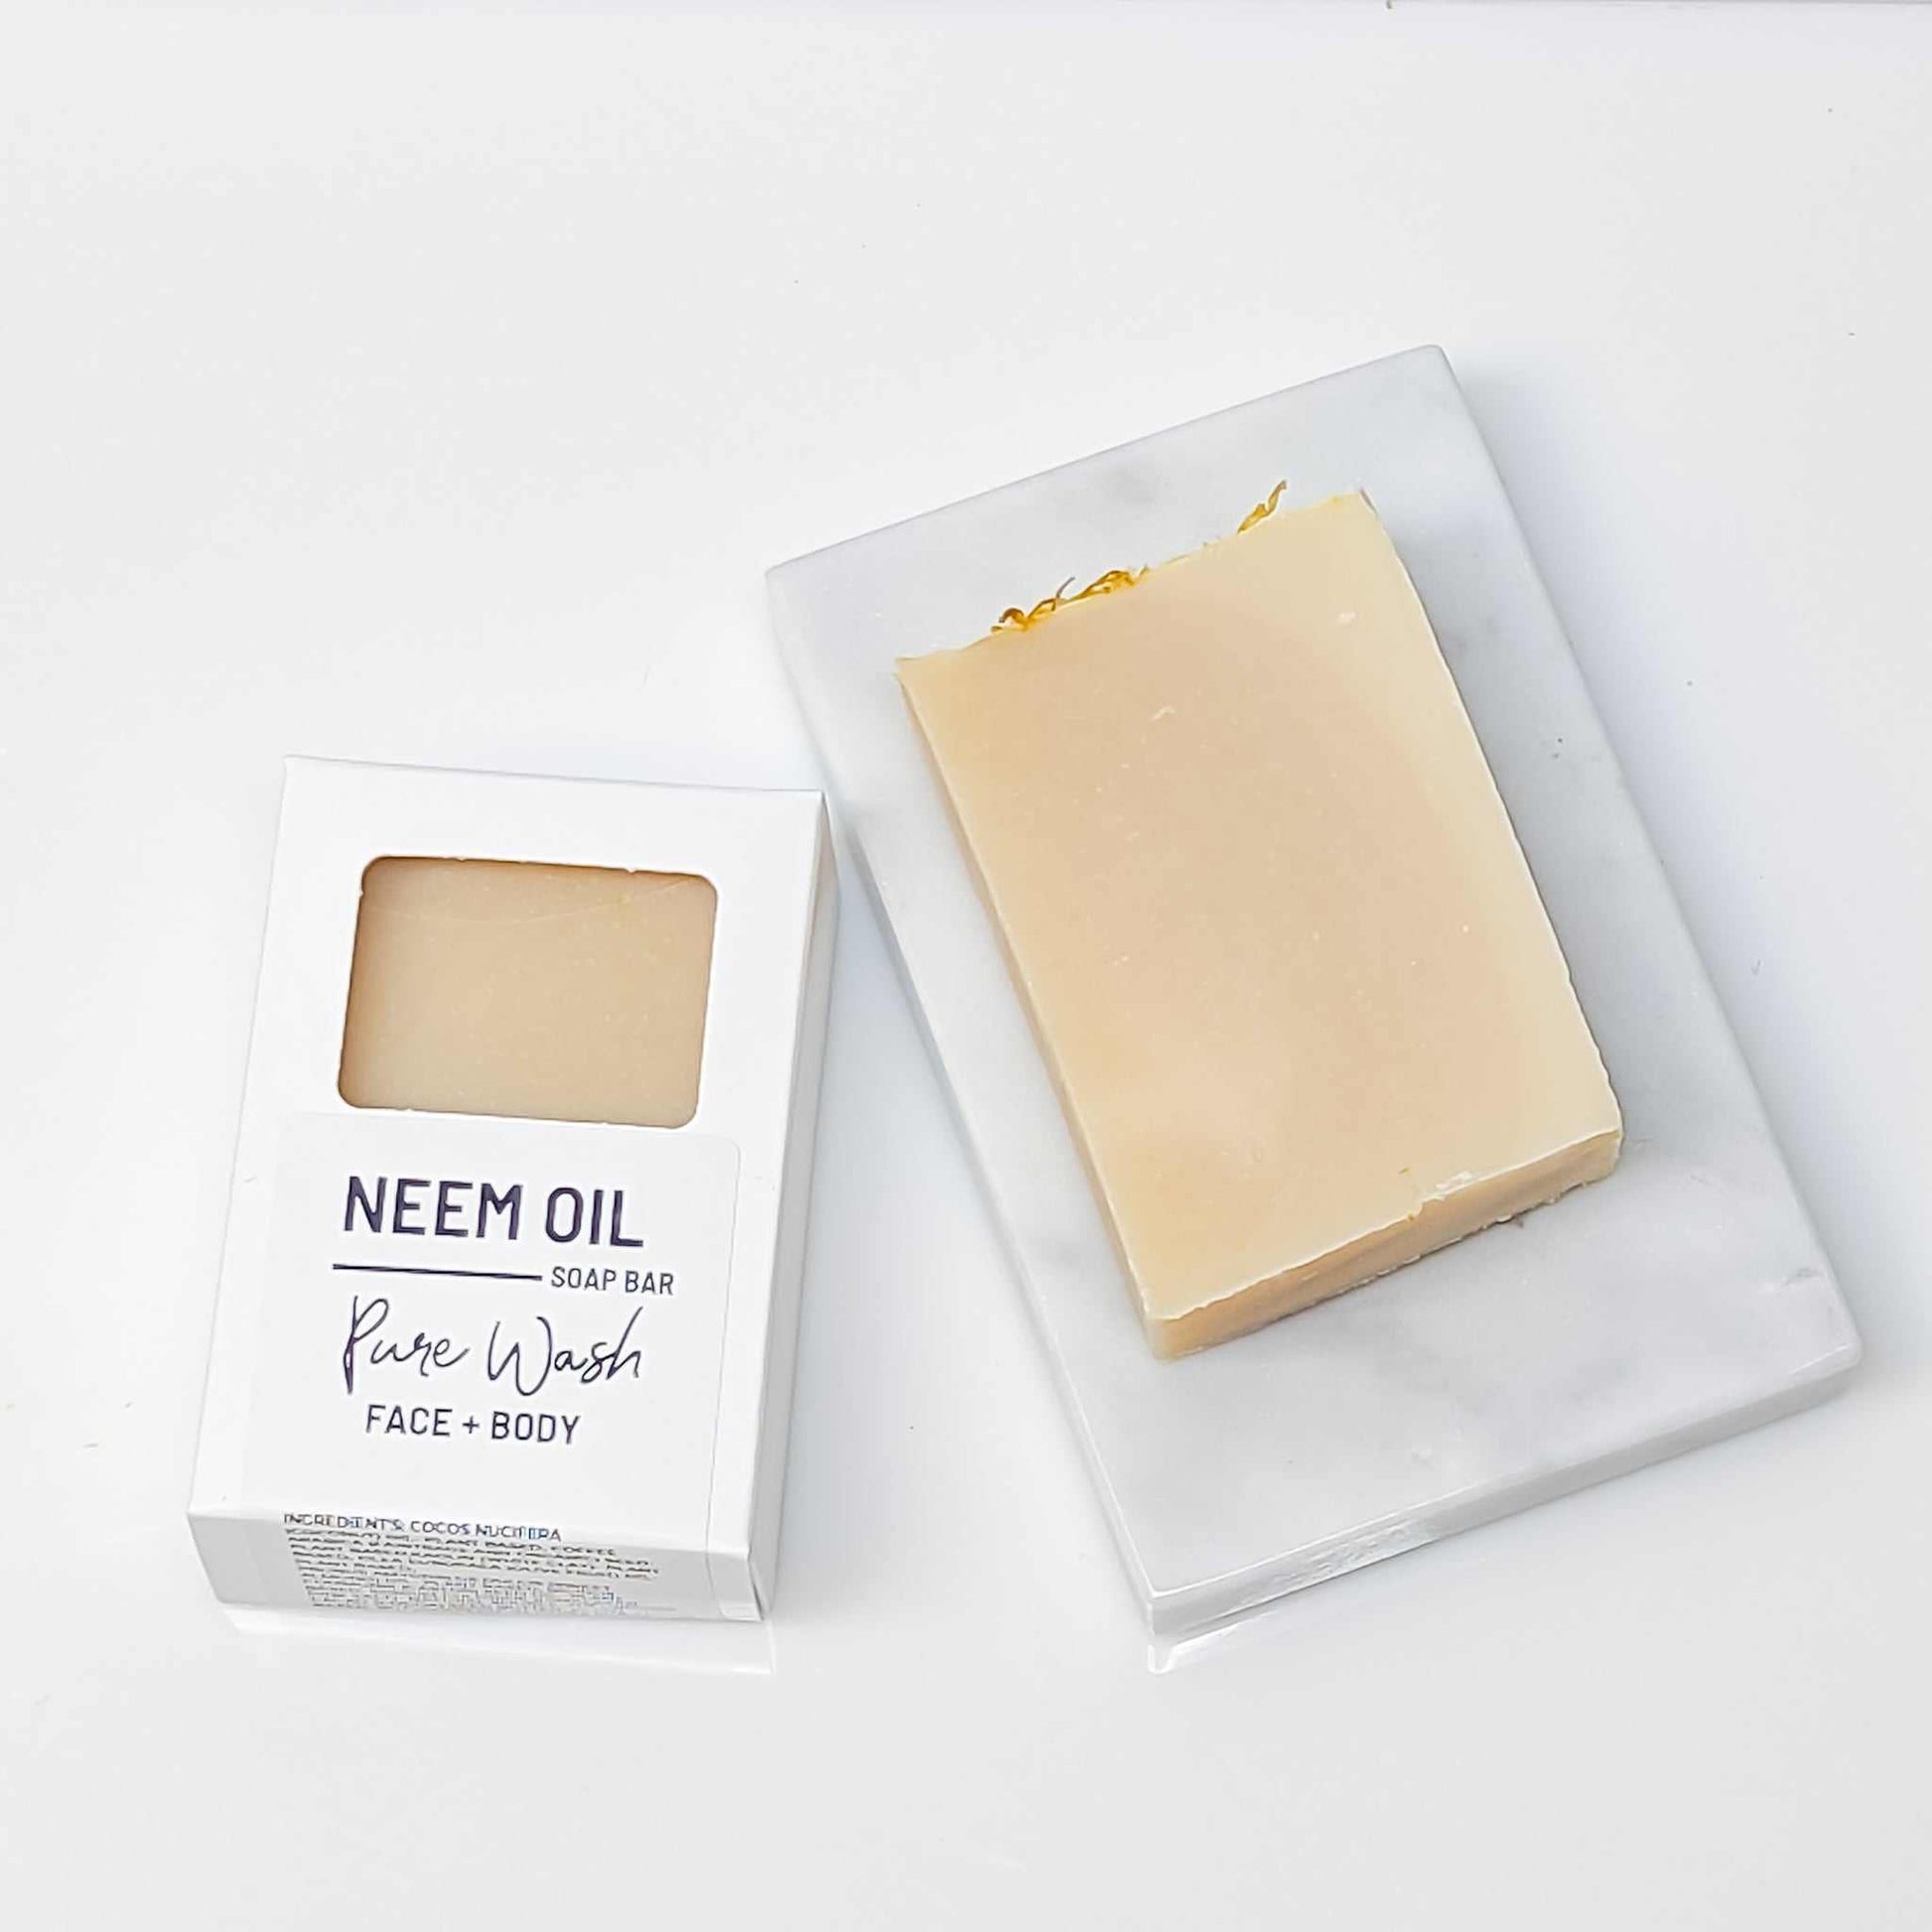 Nourishing Neem Oil Soap Bar from Canada | CG Pure Wash